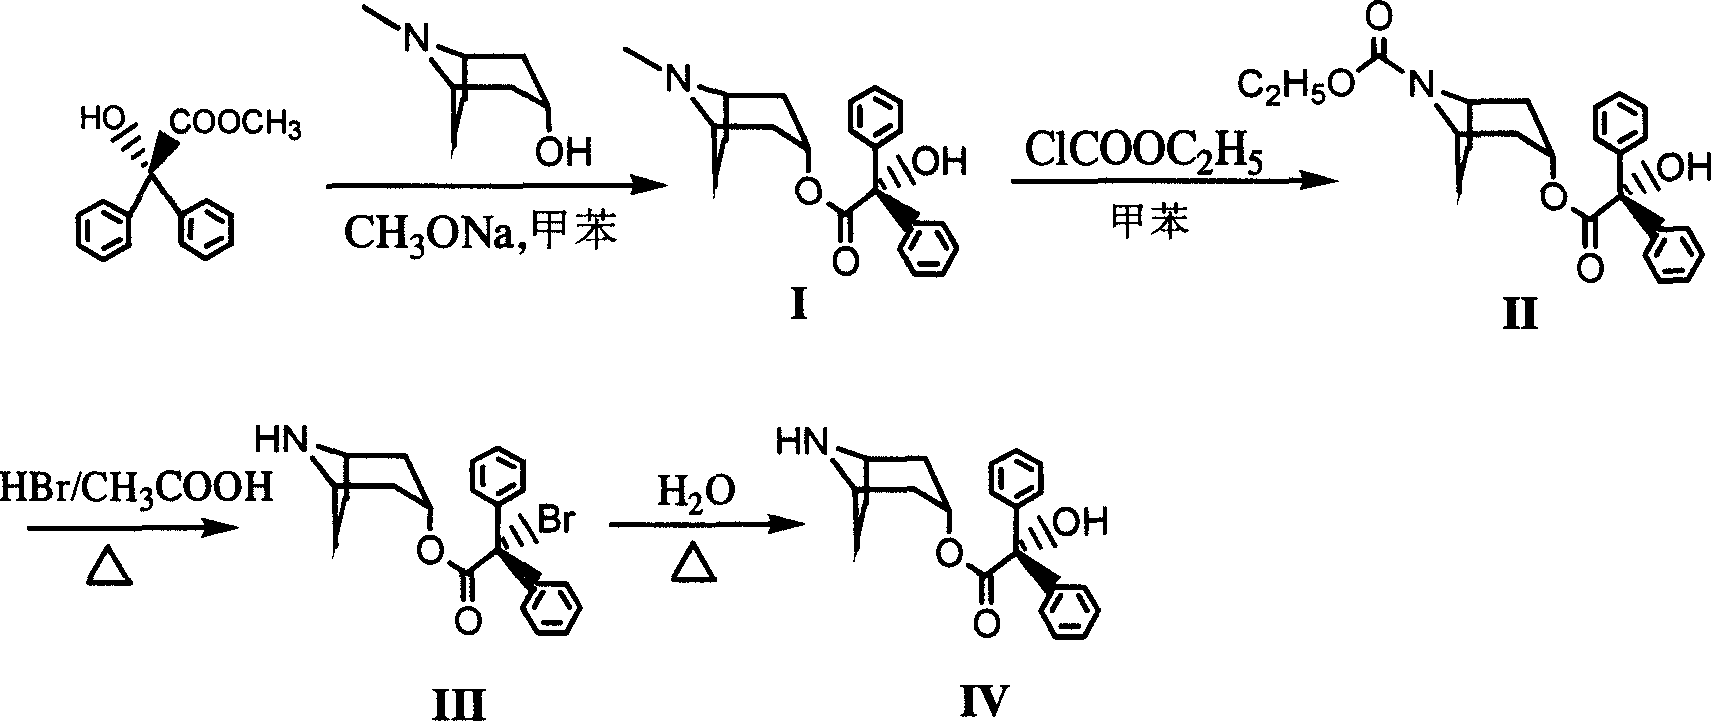 Alpha hydroxy - alpha phenyl phenylacetic acid 8 - aza dicyclo [3. 2. 1] - 3 heptyl ester, midbody compound, and preparation method